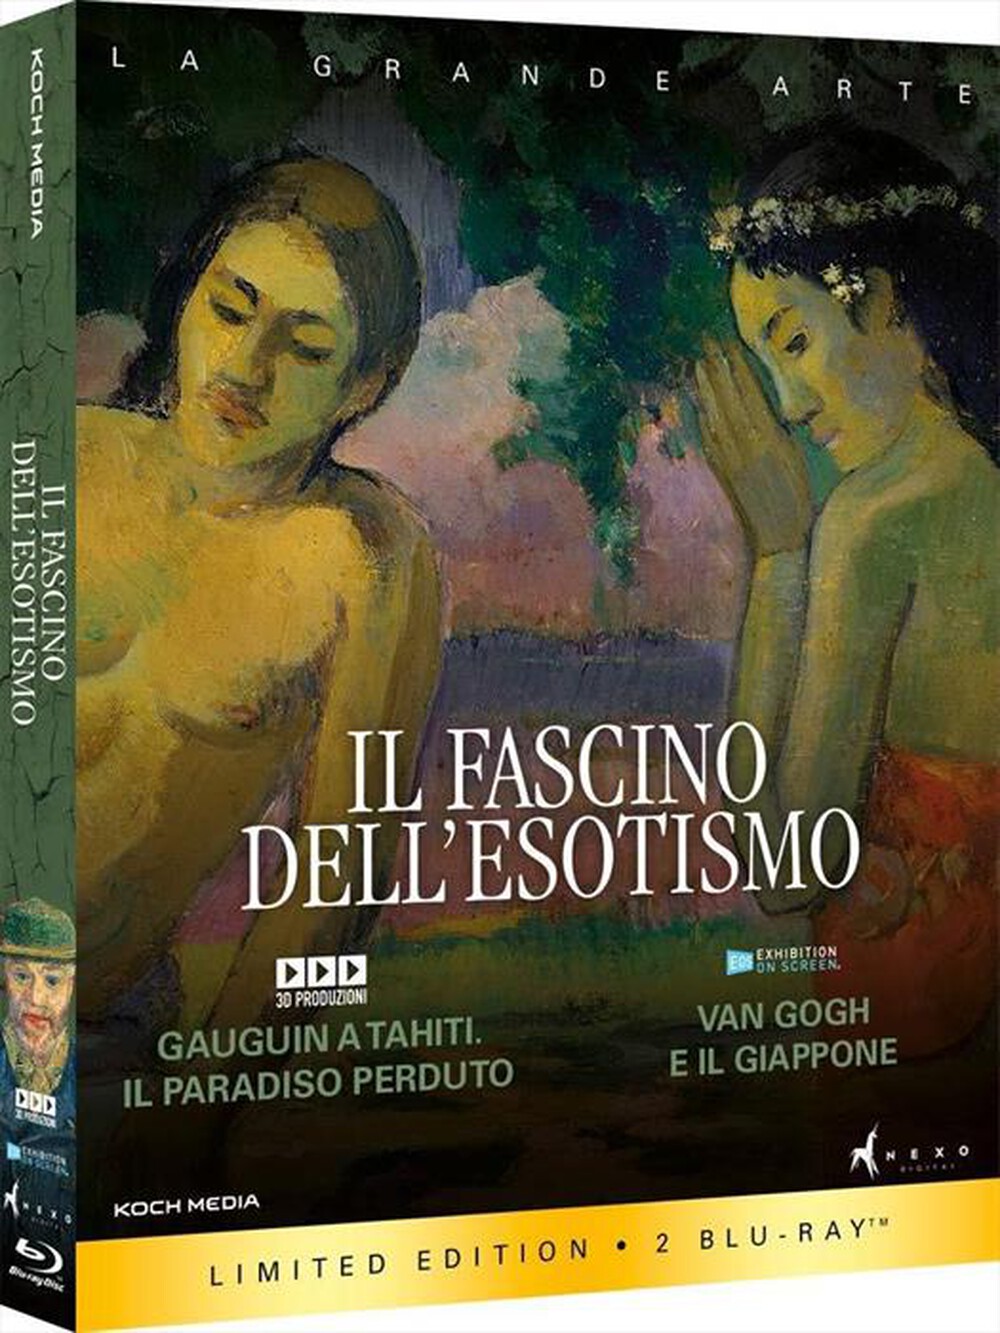 "Nexo Digital - Fascino Dell'Esotismo (Il) (Ltd) (2 Blu-Ray)"